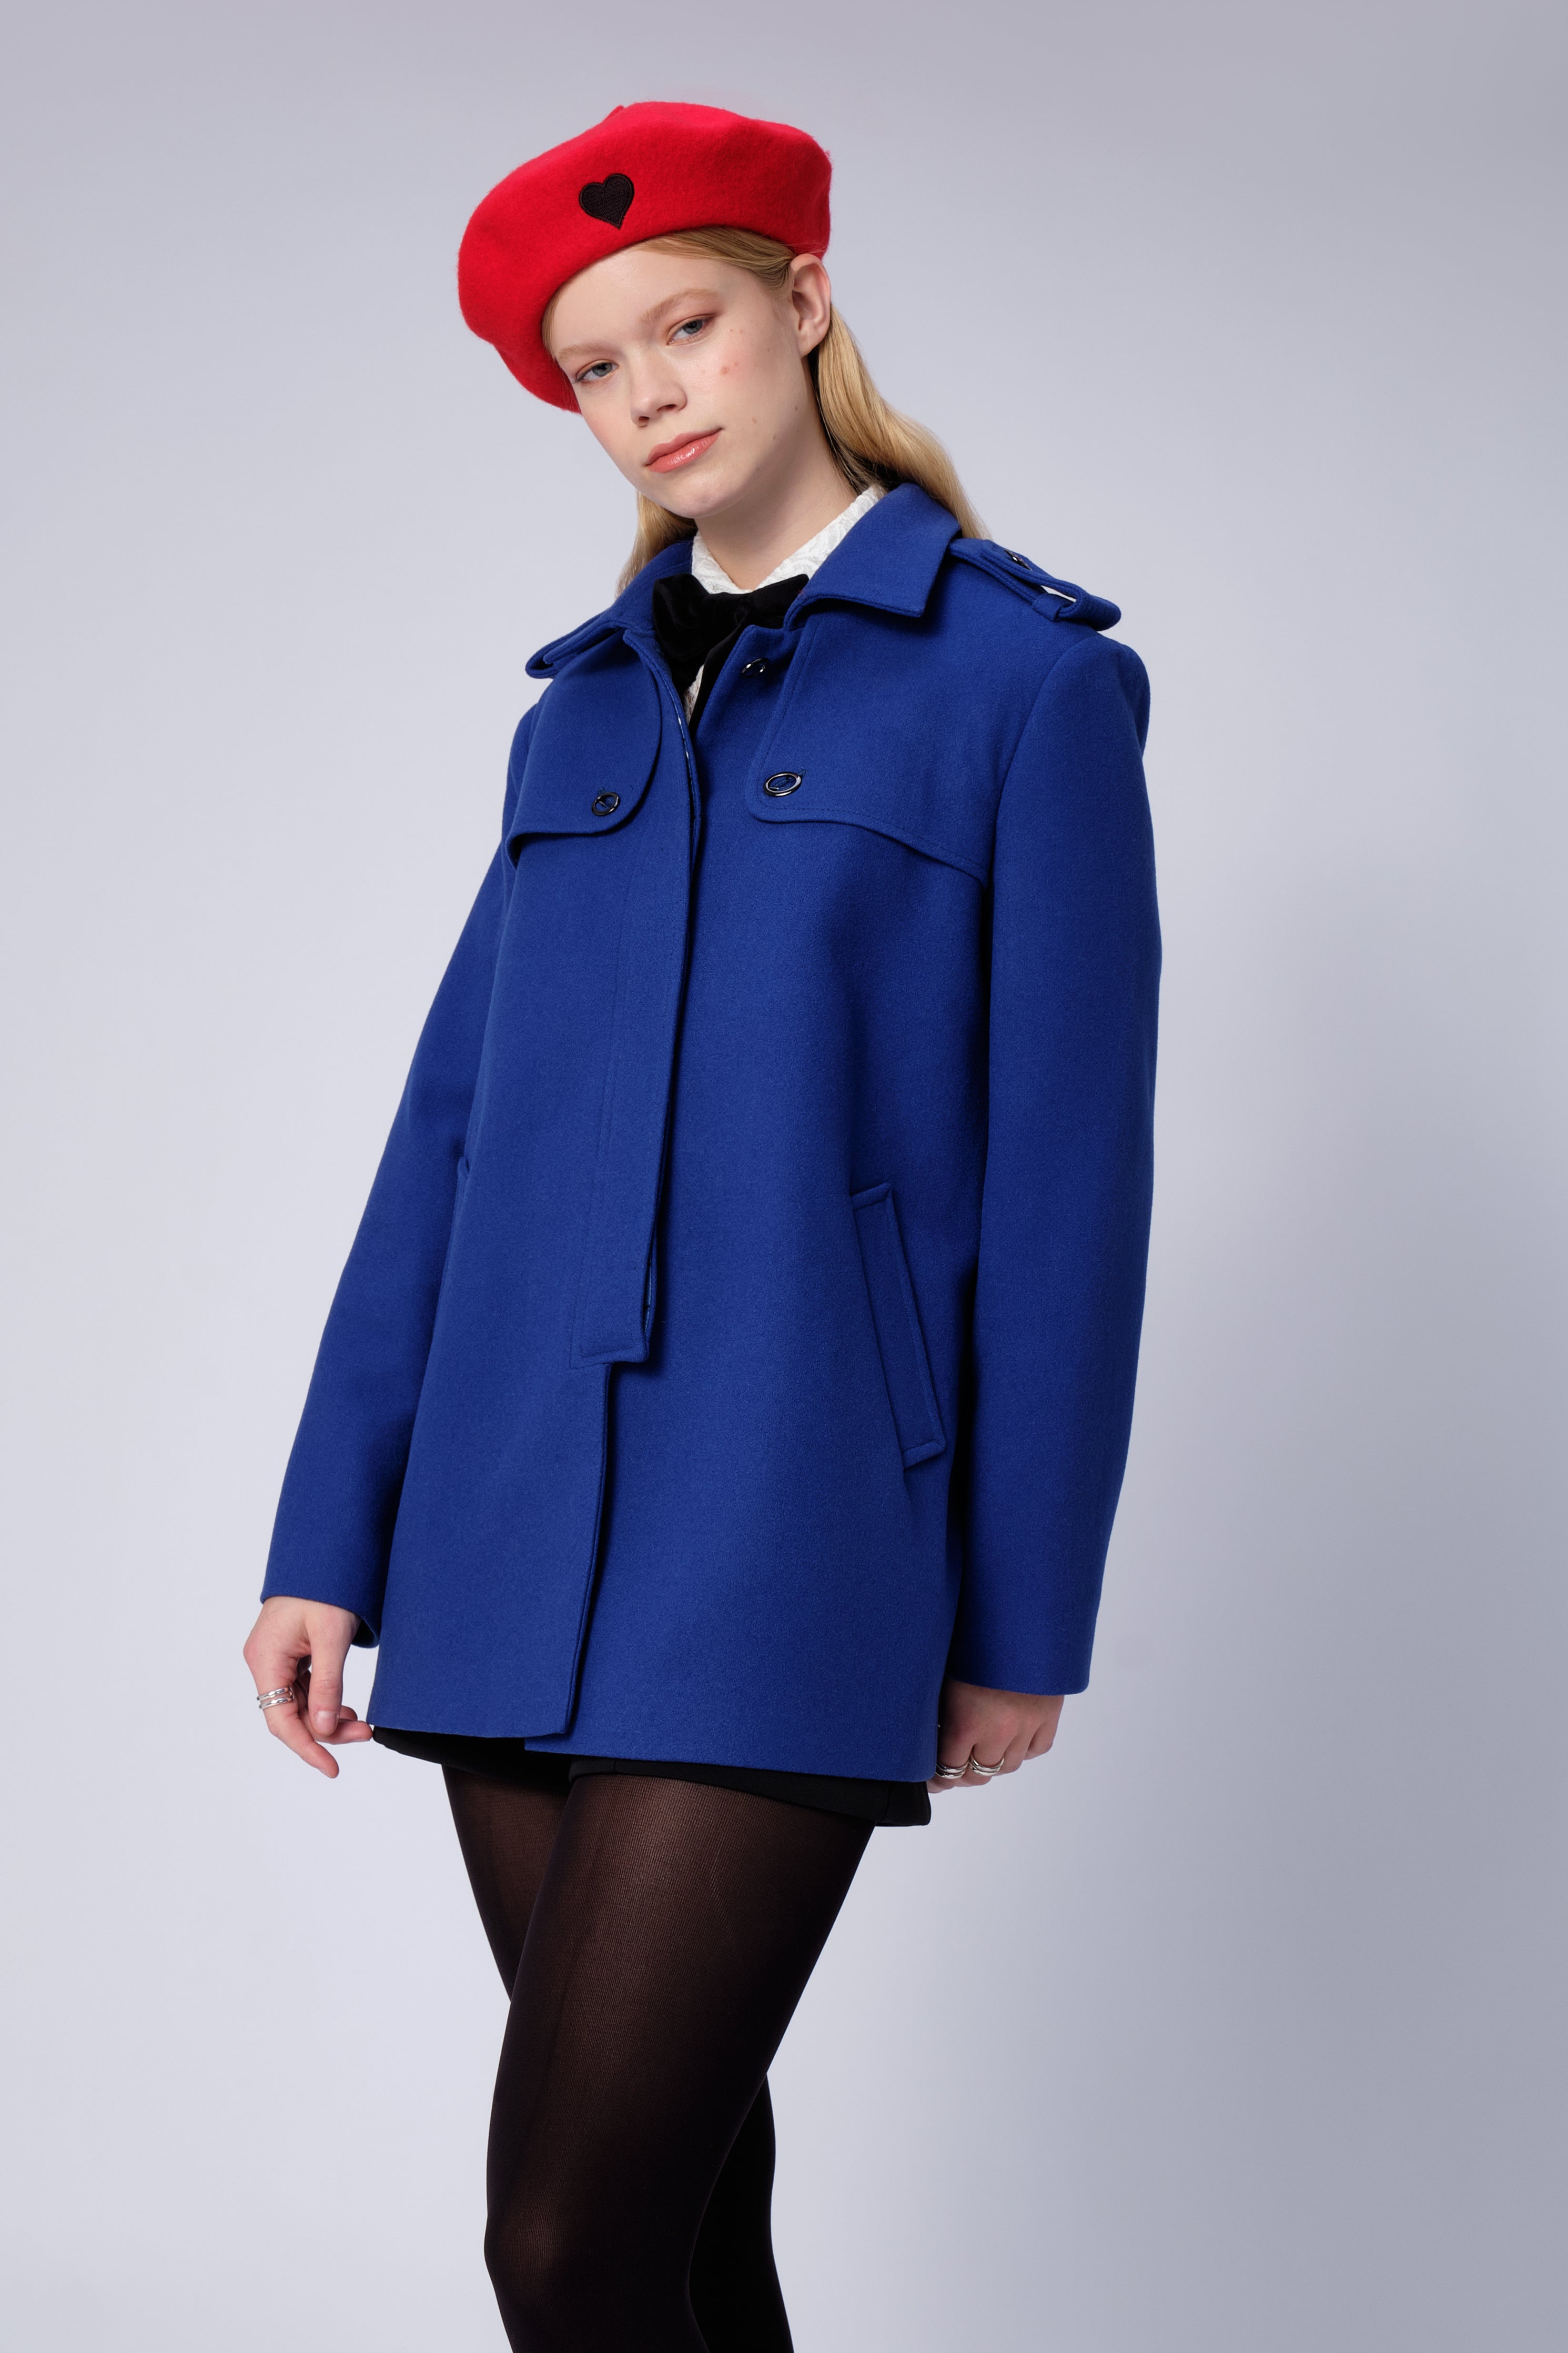 Cobalt blue trench coat